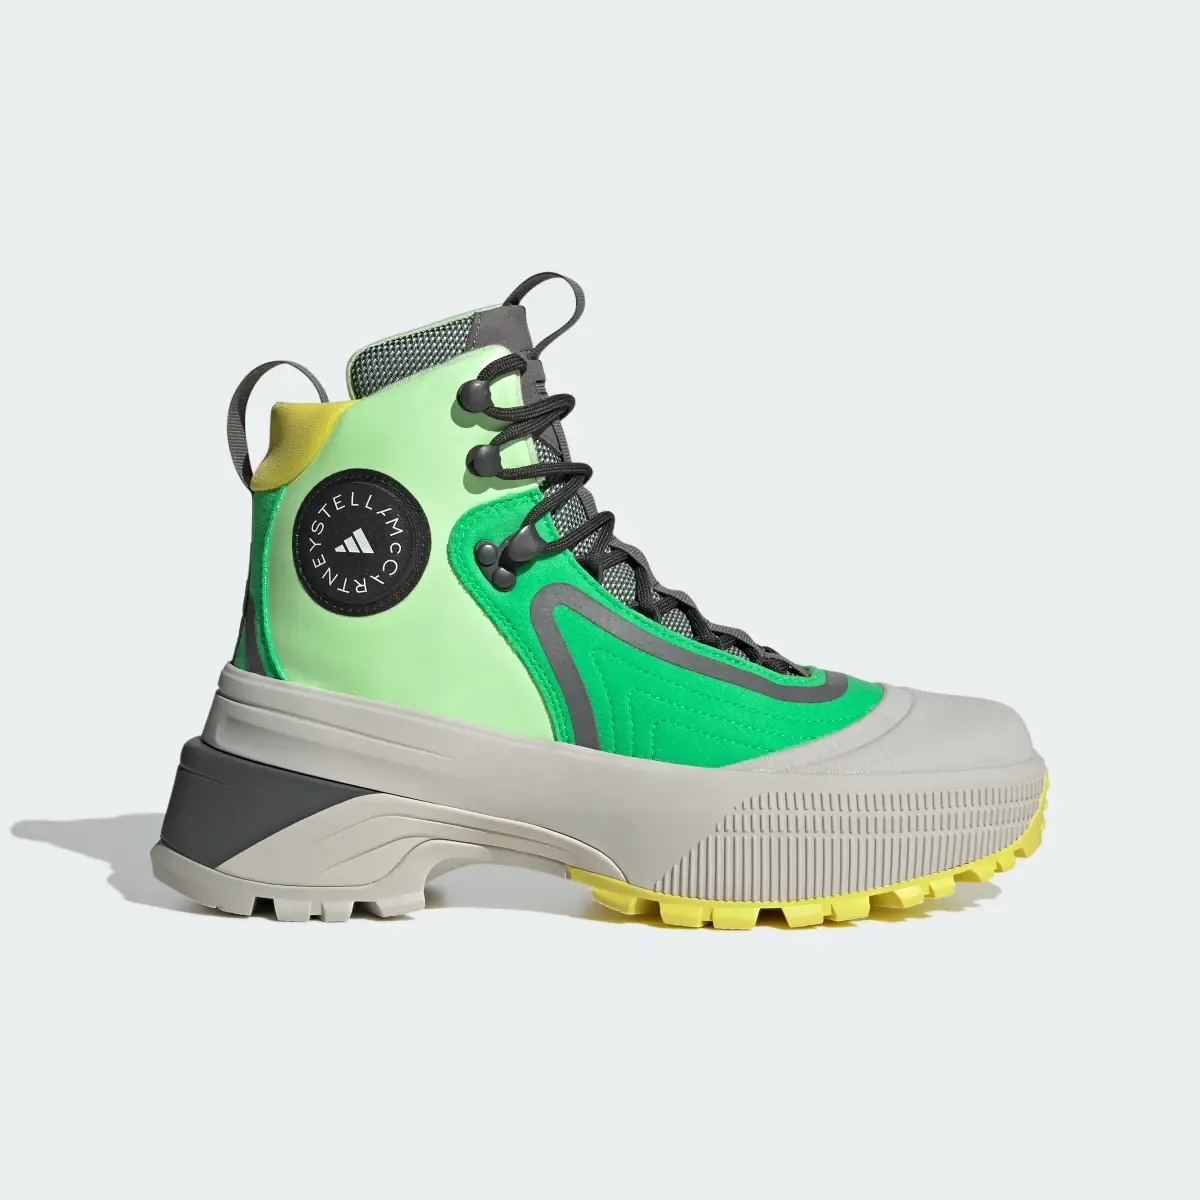 Adidas by Stella McCartney x Terrex Hiking Boots. 2